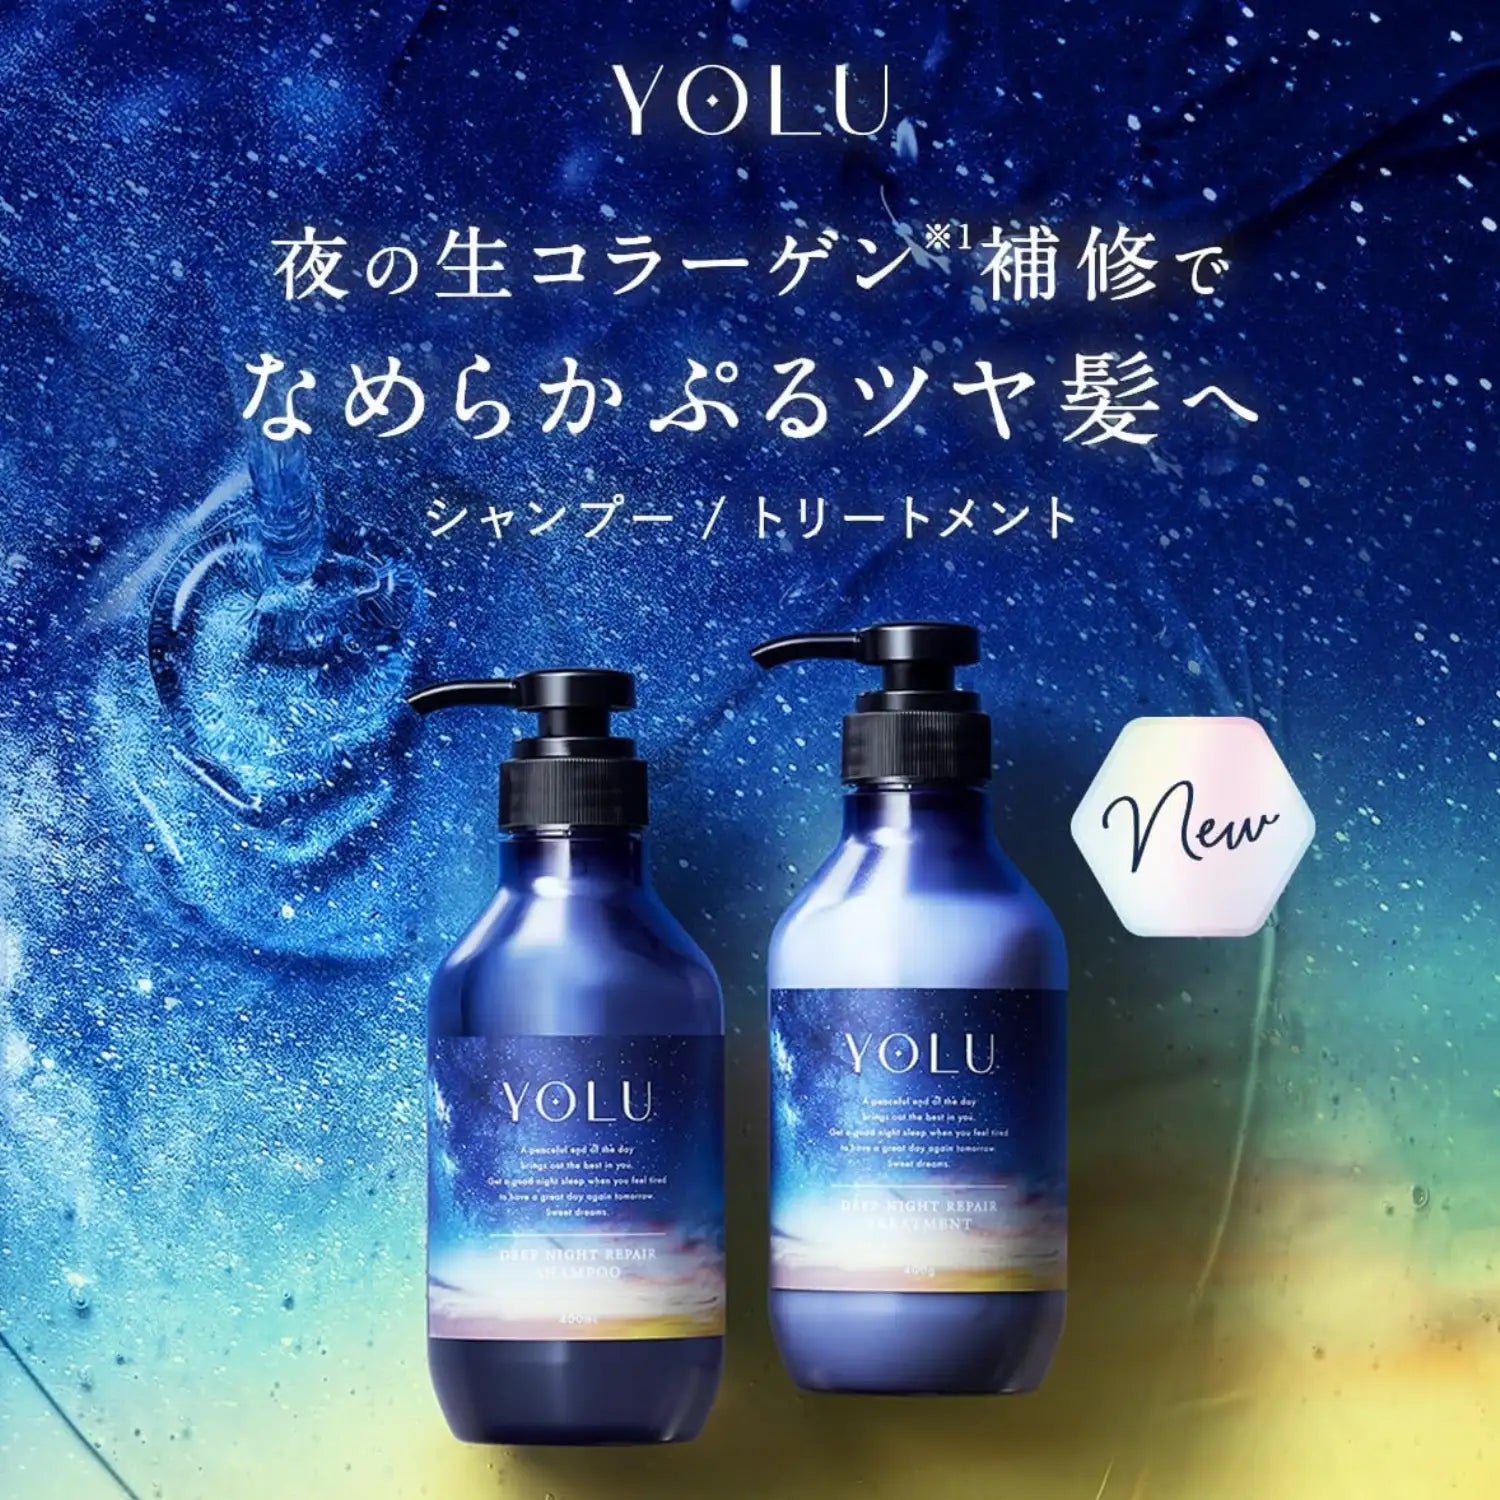 YOLU Deep Night Repair Shampoo & Treatment Set (400ml Each) - Buy Me Japan